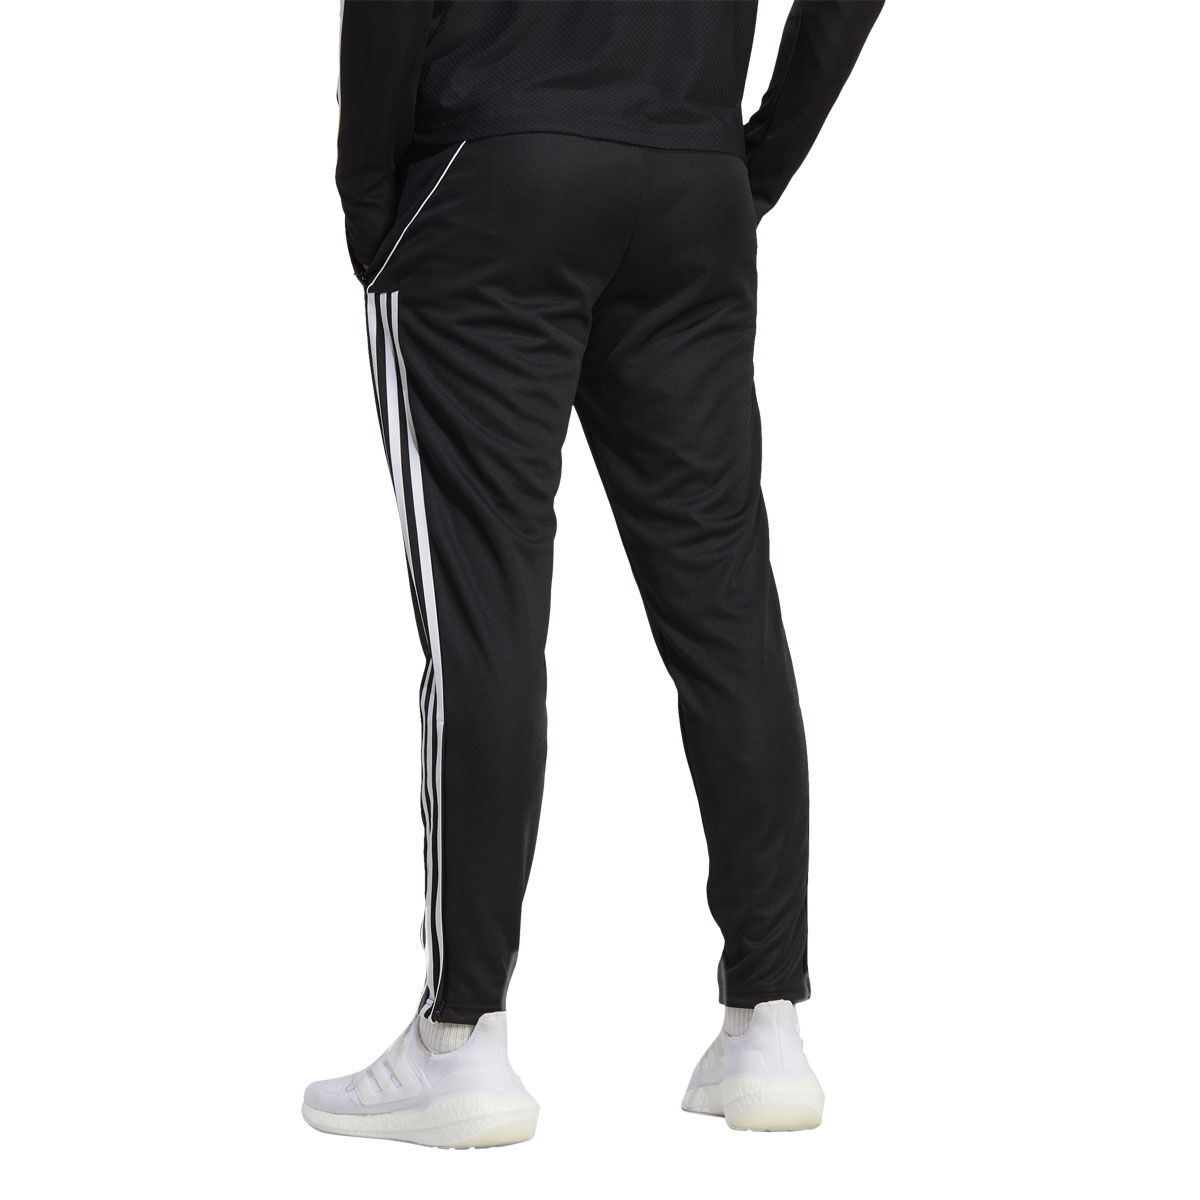  adidas Women's Soccer Tiro 19 Training Pant, White/Black, Small  : Clothing, Shoes & Jewelry